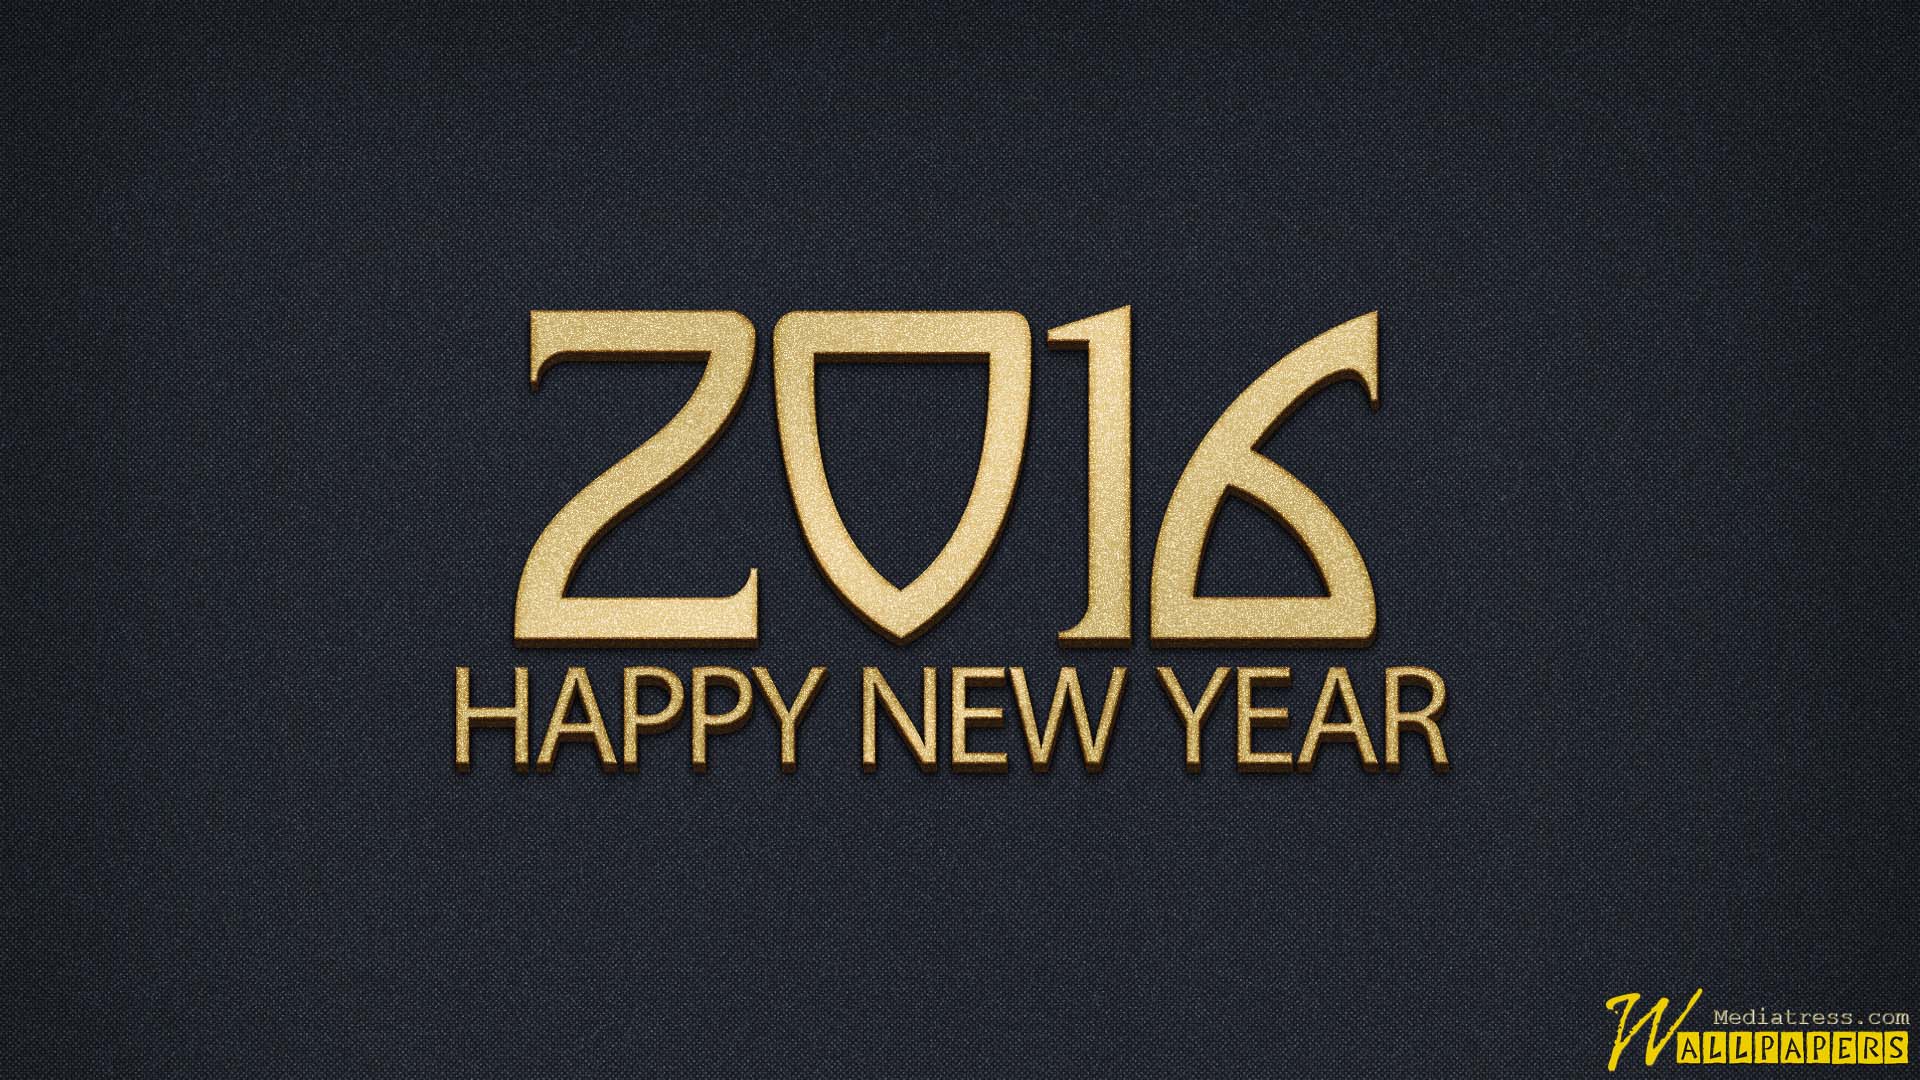 Happy New Year 2016 Wallpaper HD Free